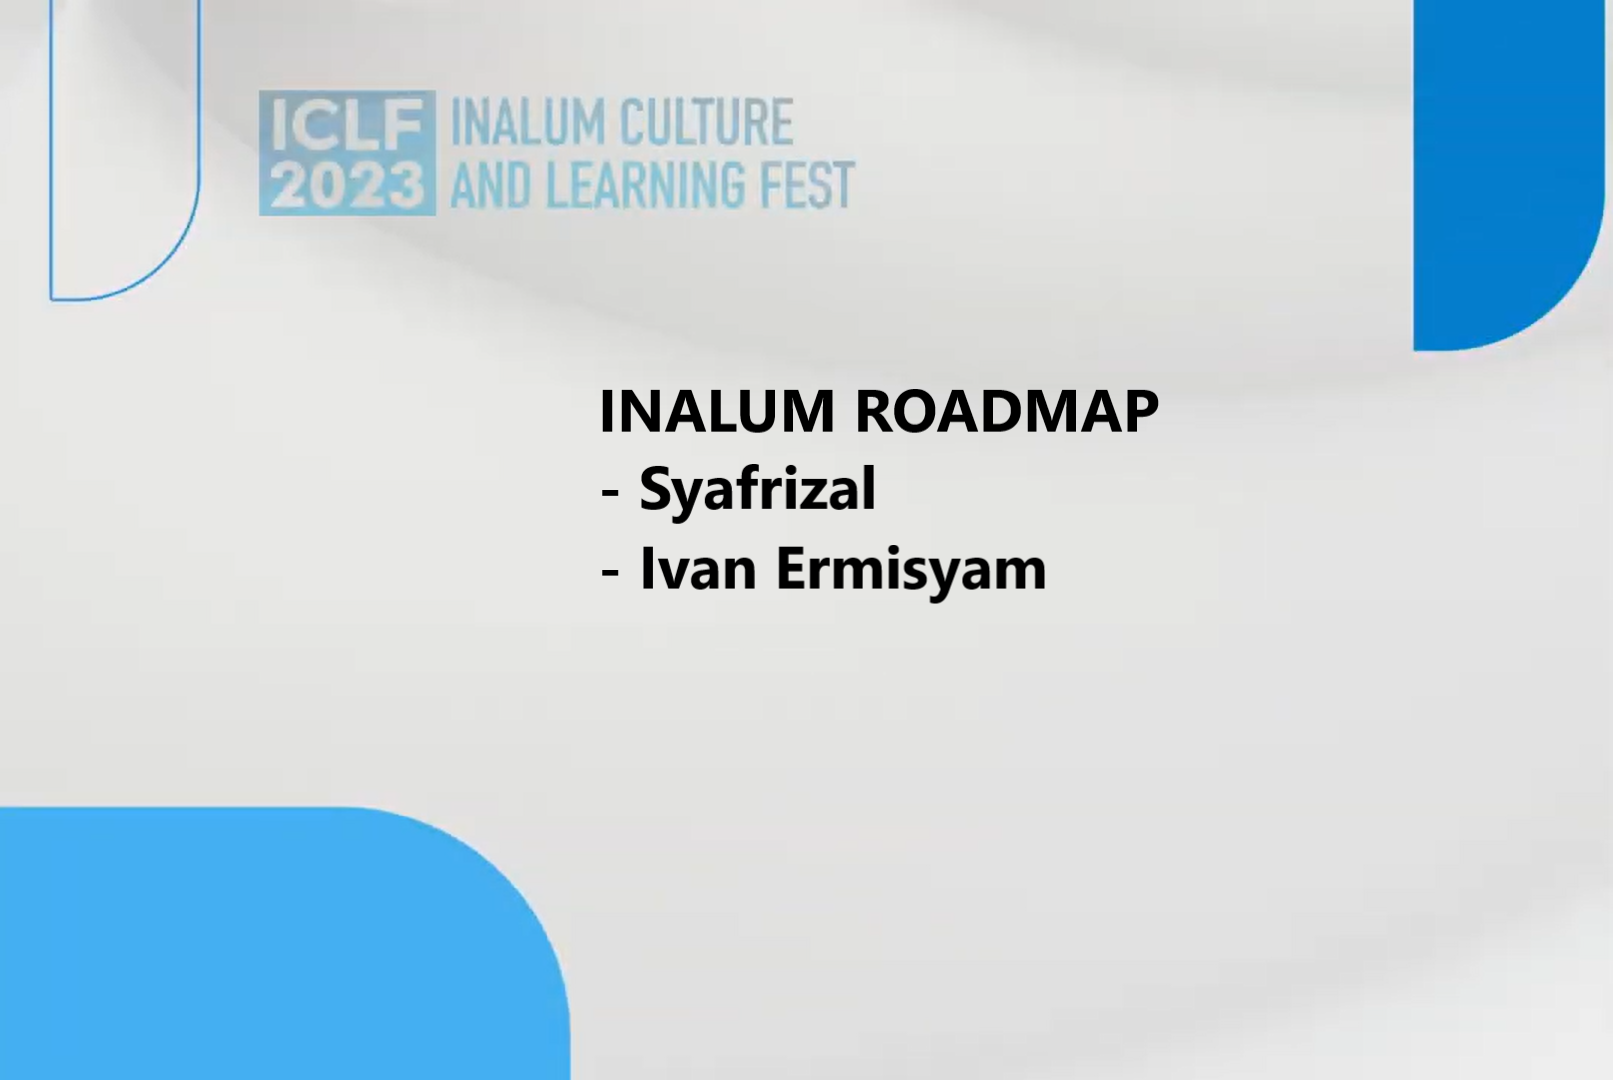 ICLF 2023 - INALUM Roadmap